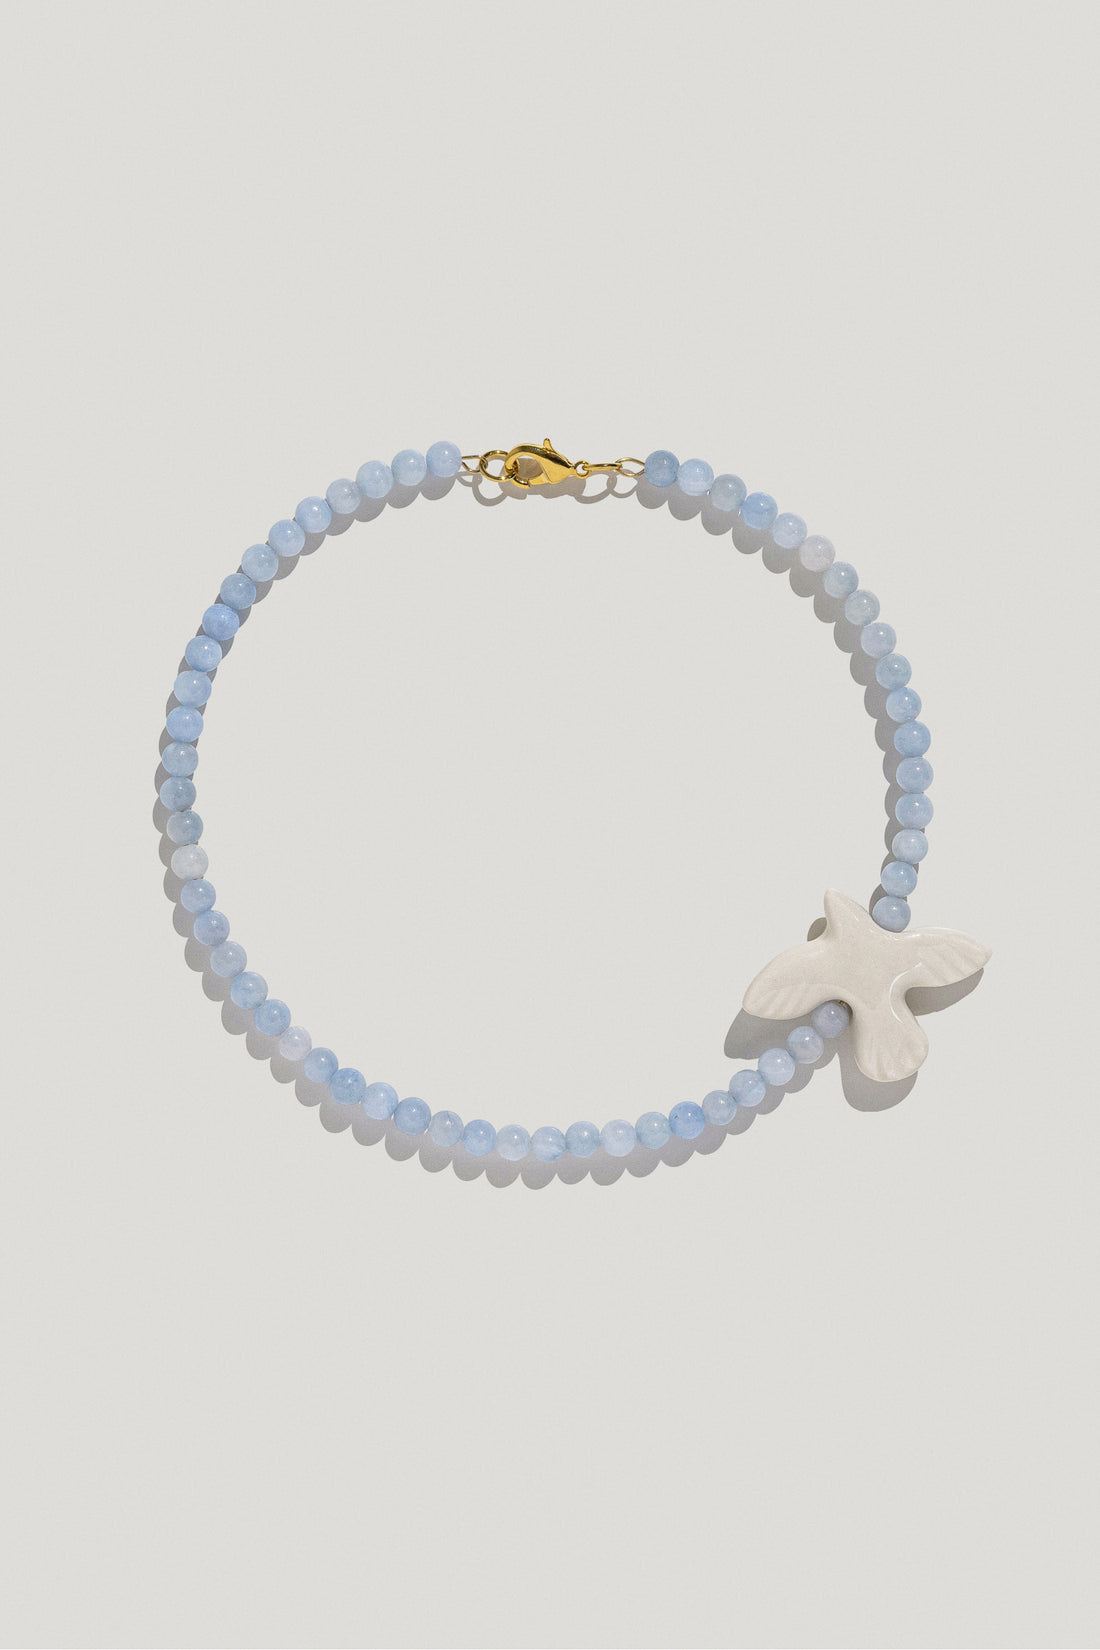 Myrni necklace with blue quartz and a porcelain bird